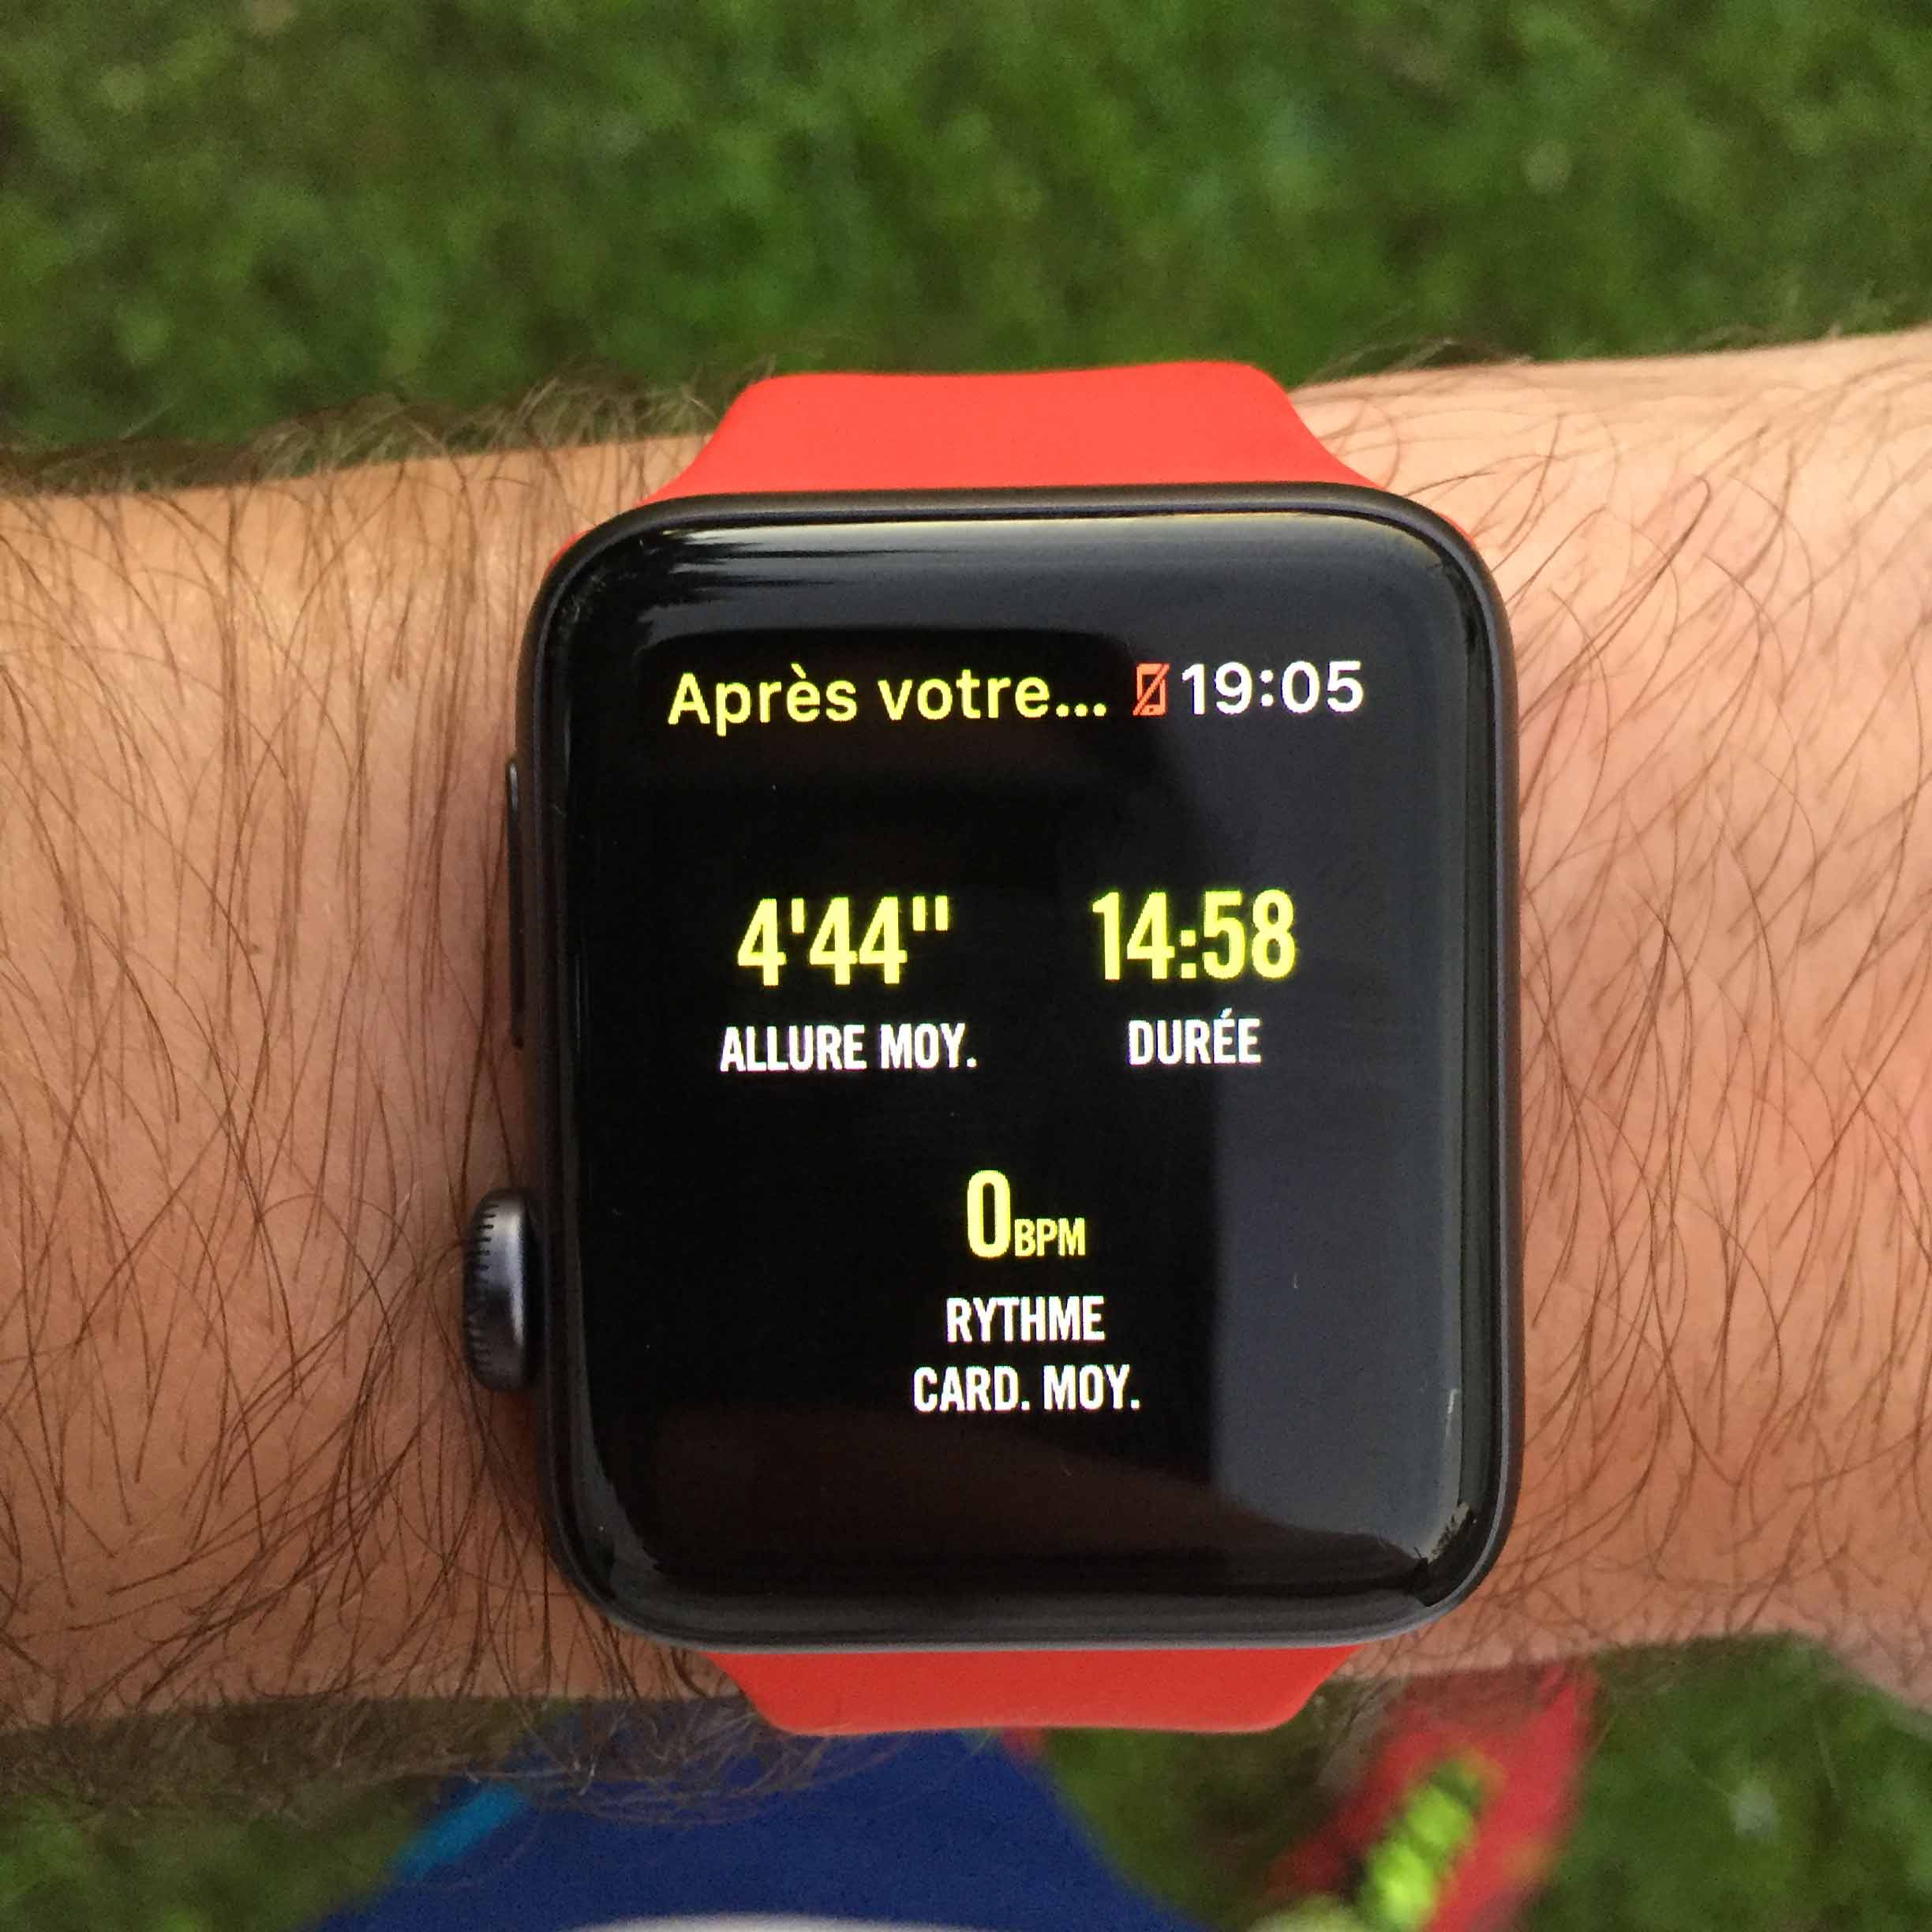 Nike+ Run Club test on the Apple Watch 